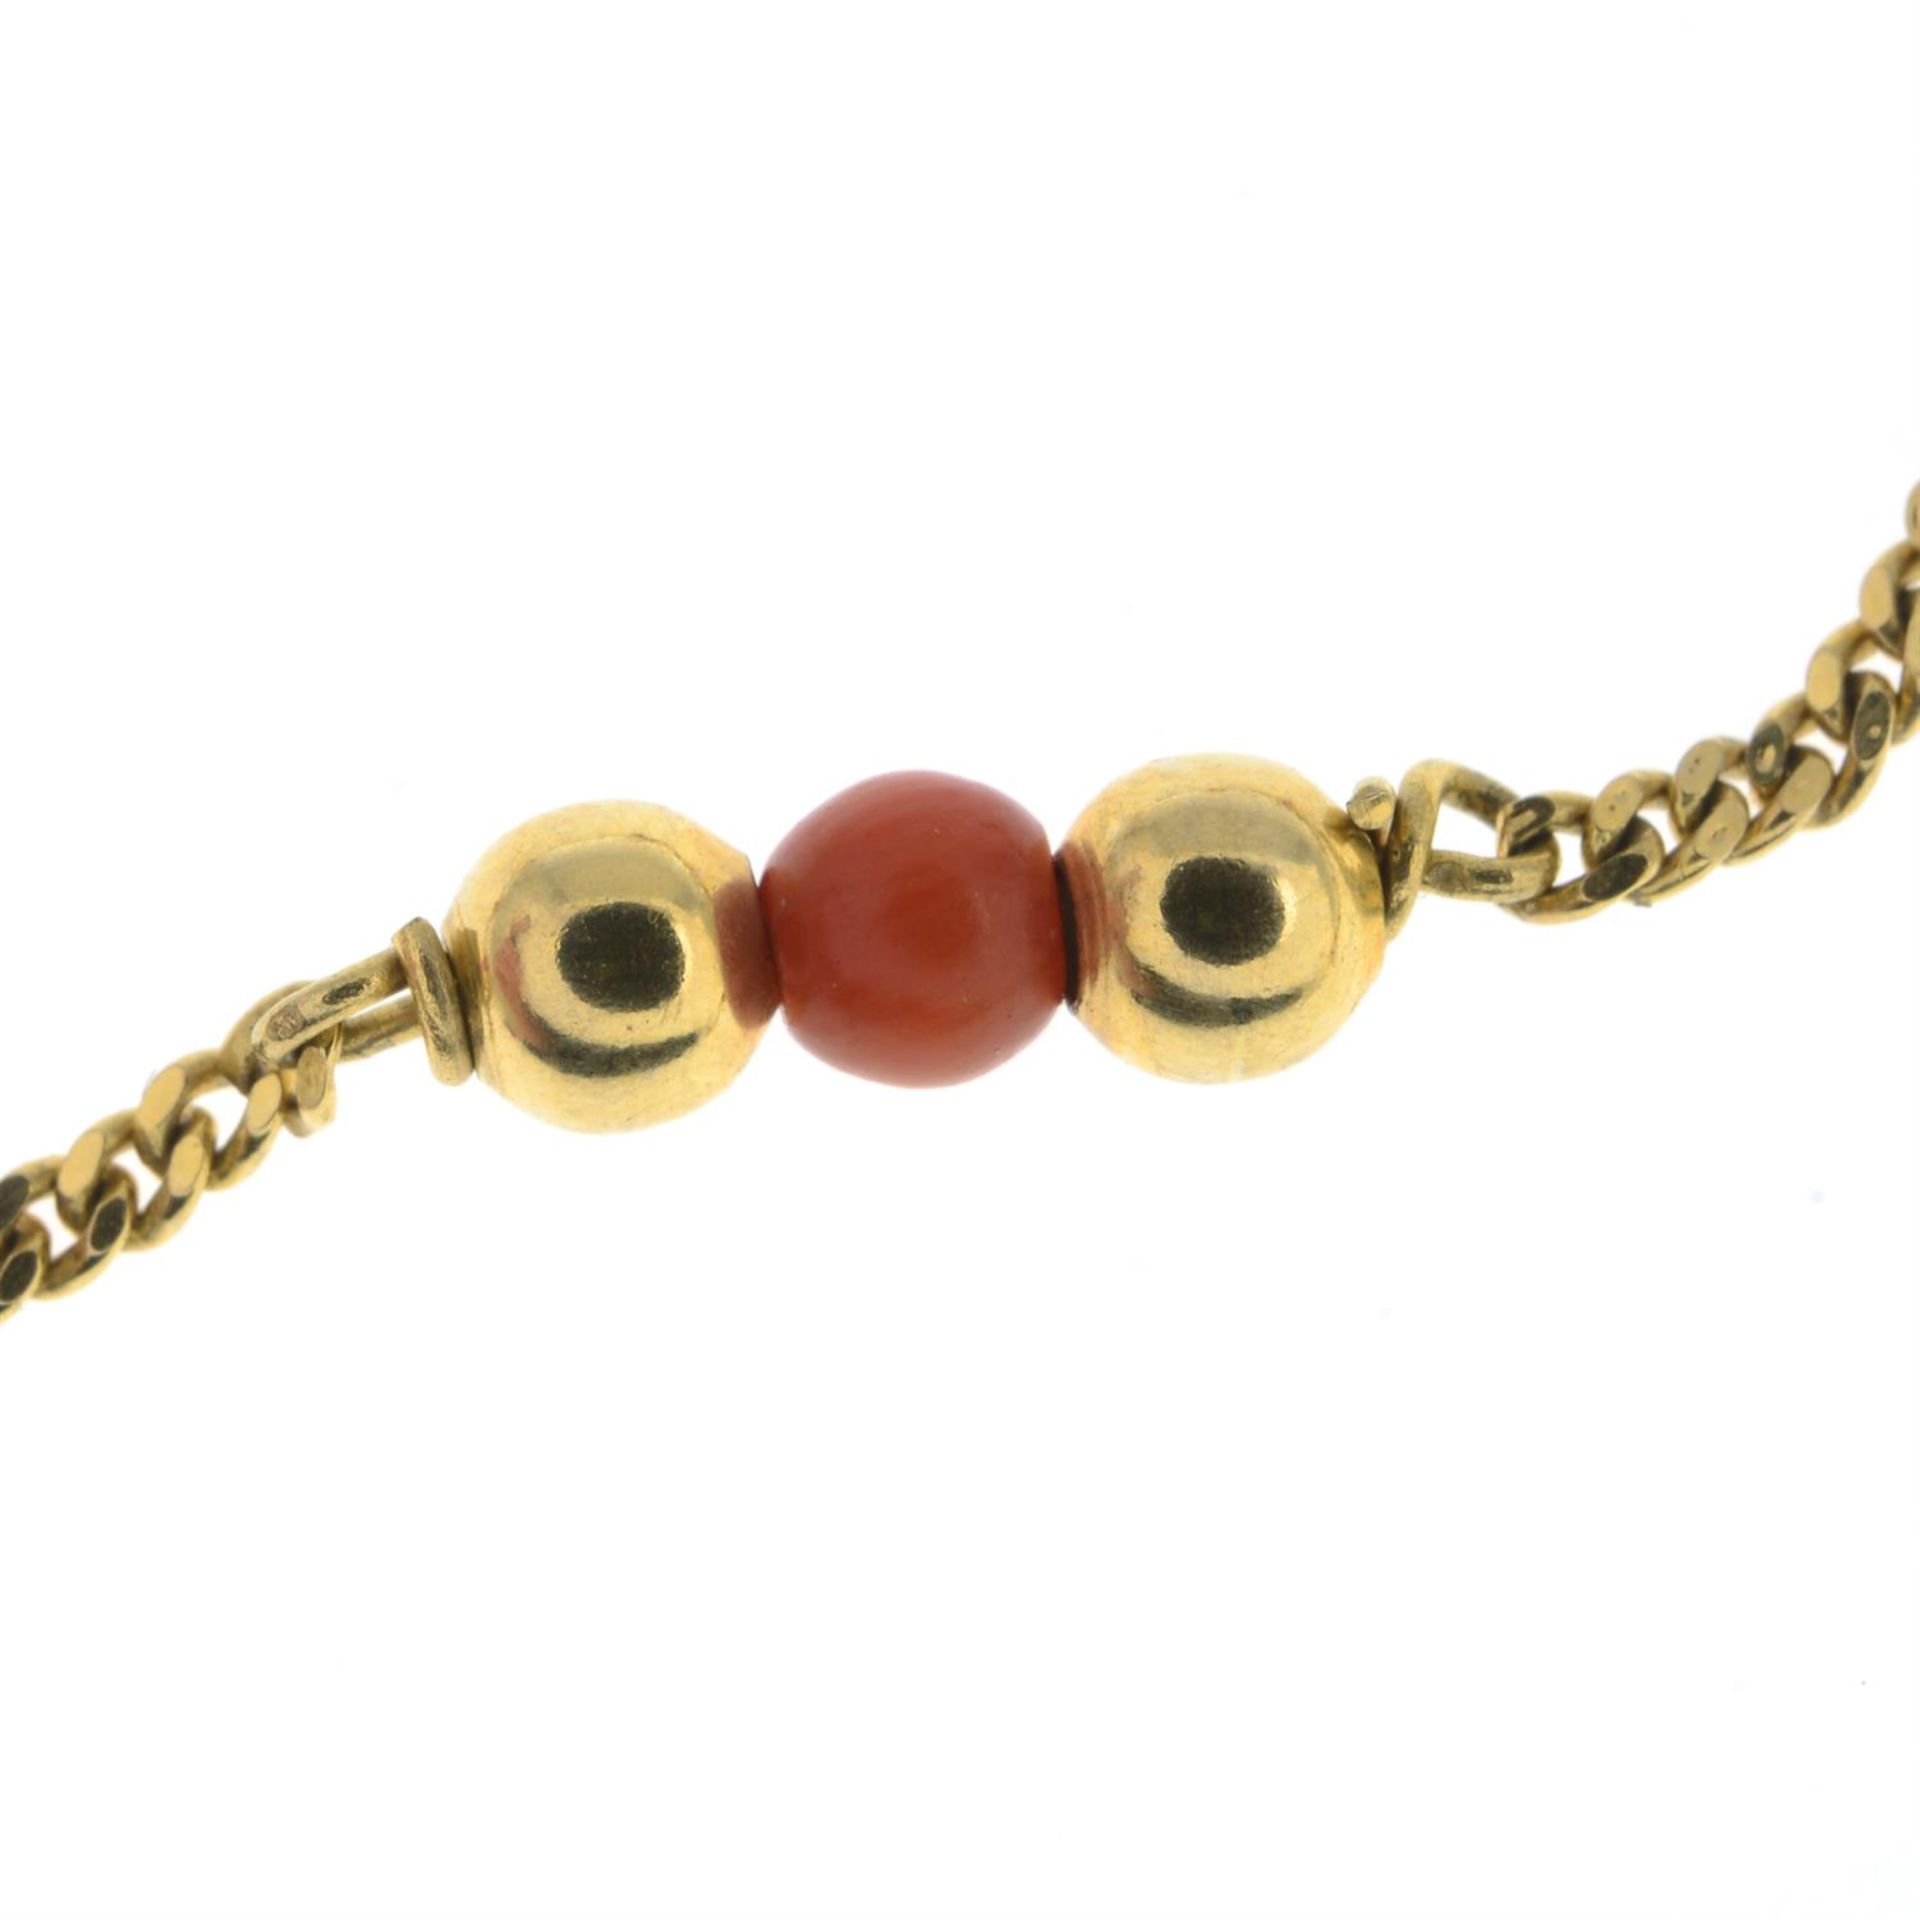 9ct gold coral necklace & bracelet - Image 3 of 3